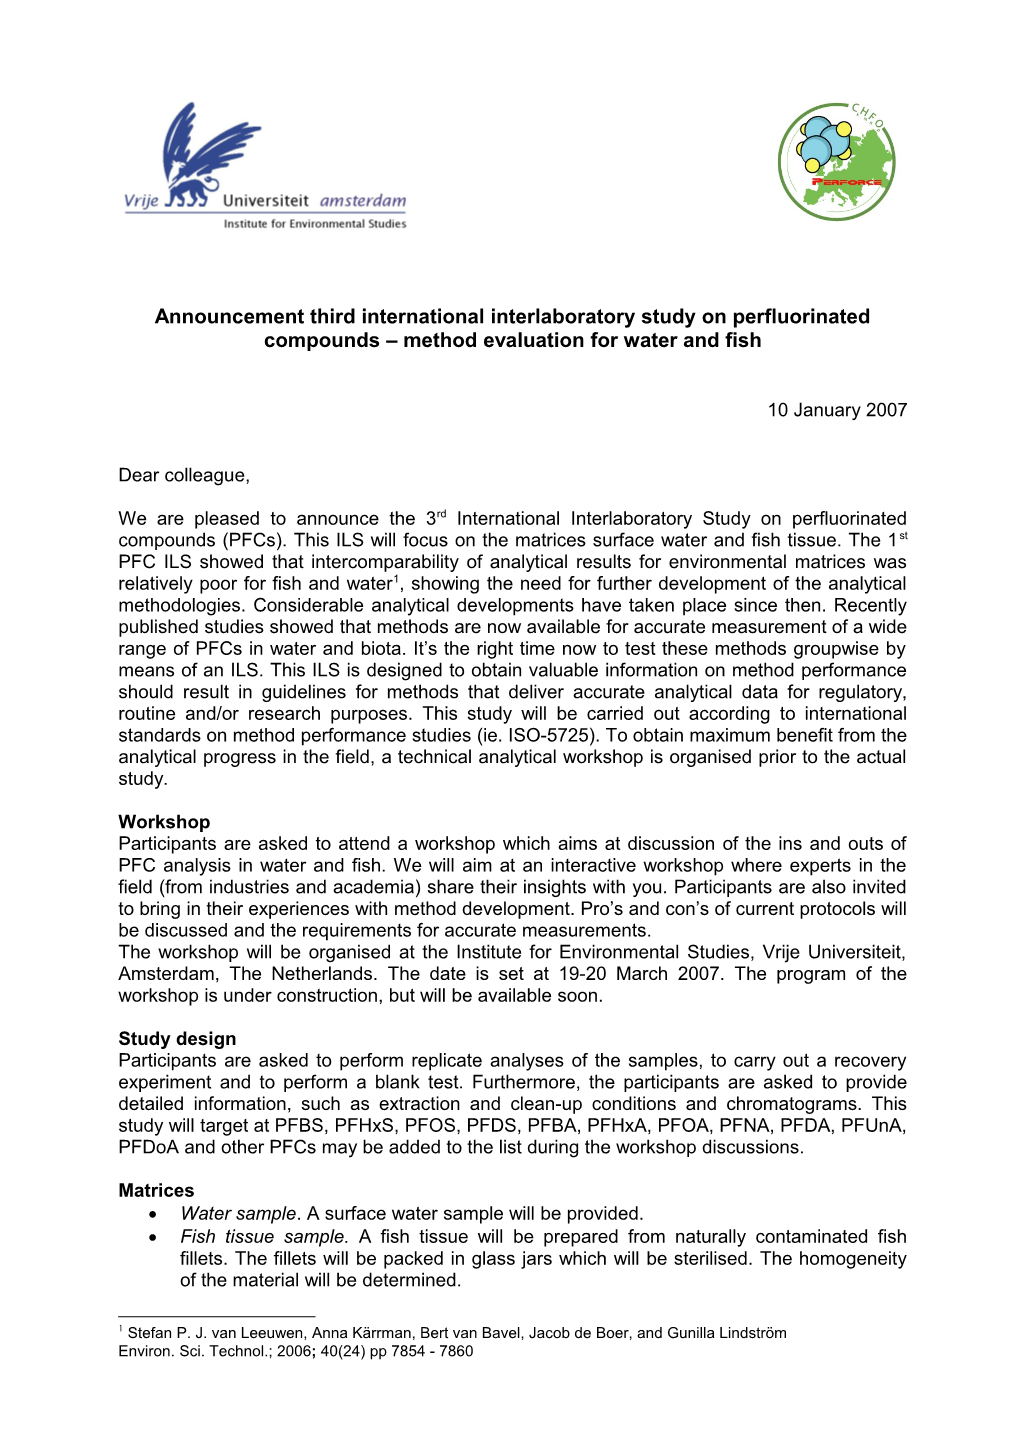 Announcement Third International Interlaboratory Study on Perfluorinated Compounds Method